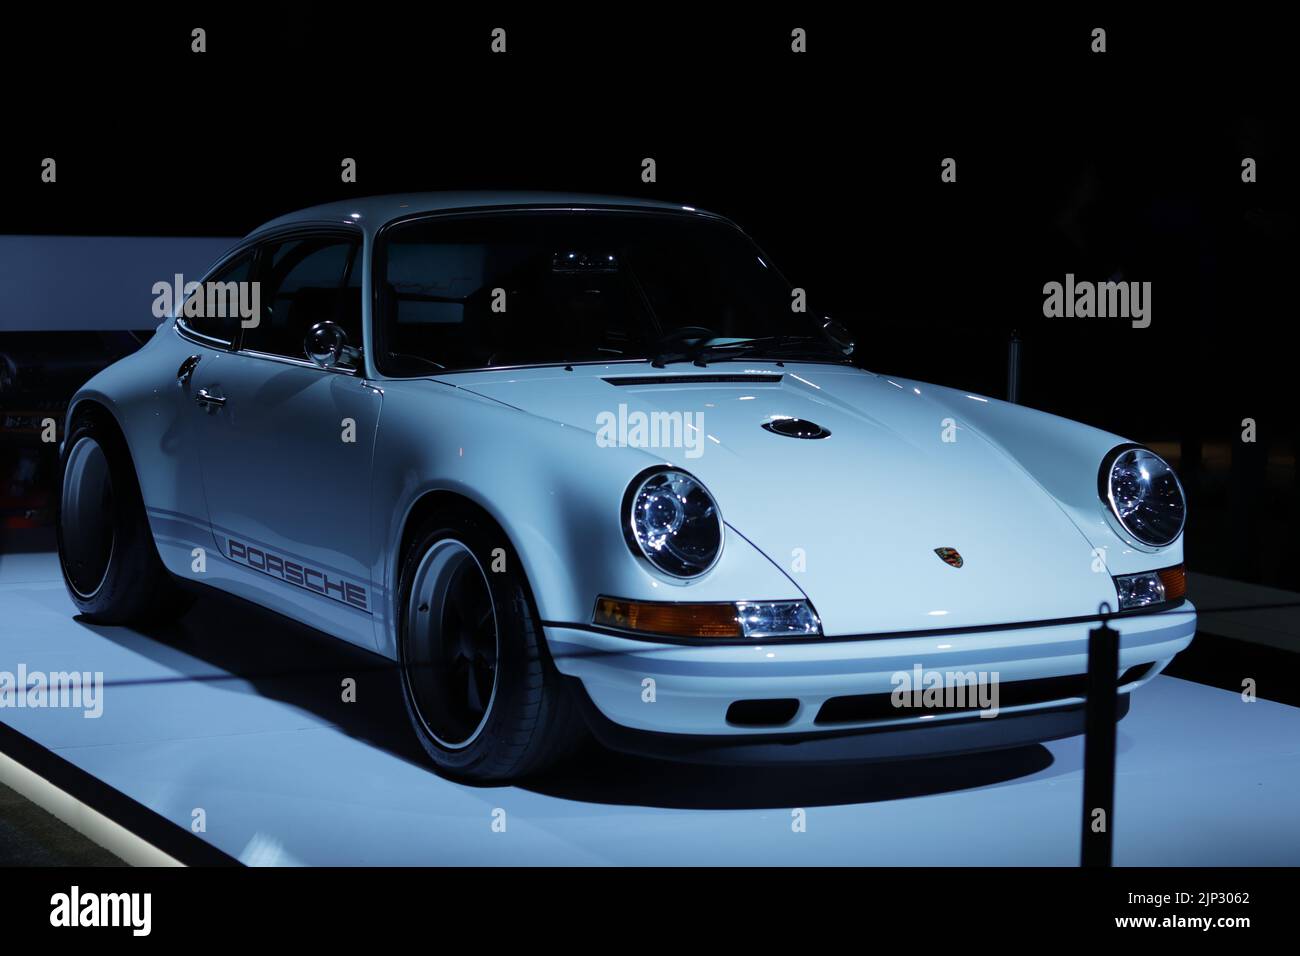 A white classic Porsche sports car on display at the Toronto auto show Stock Photo